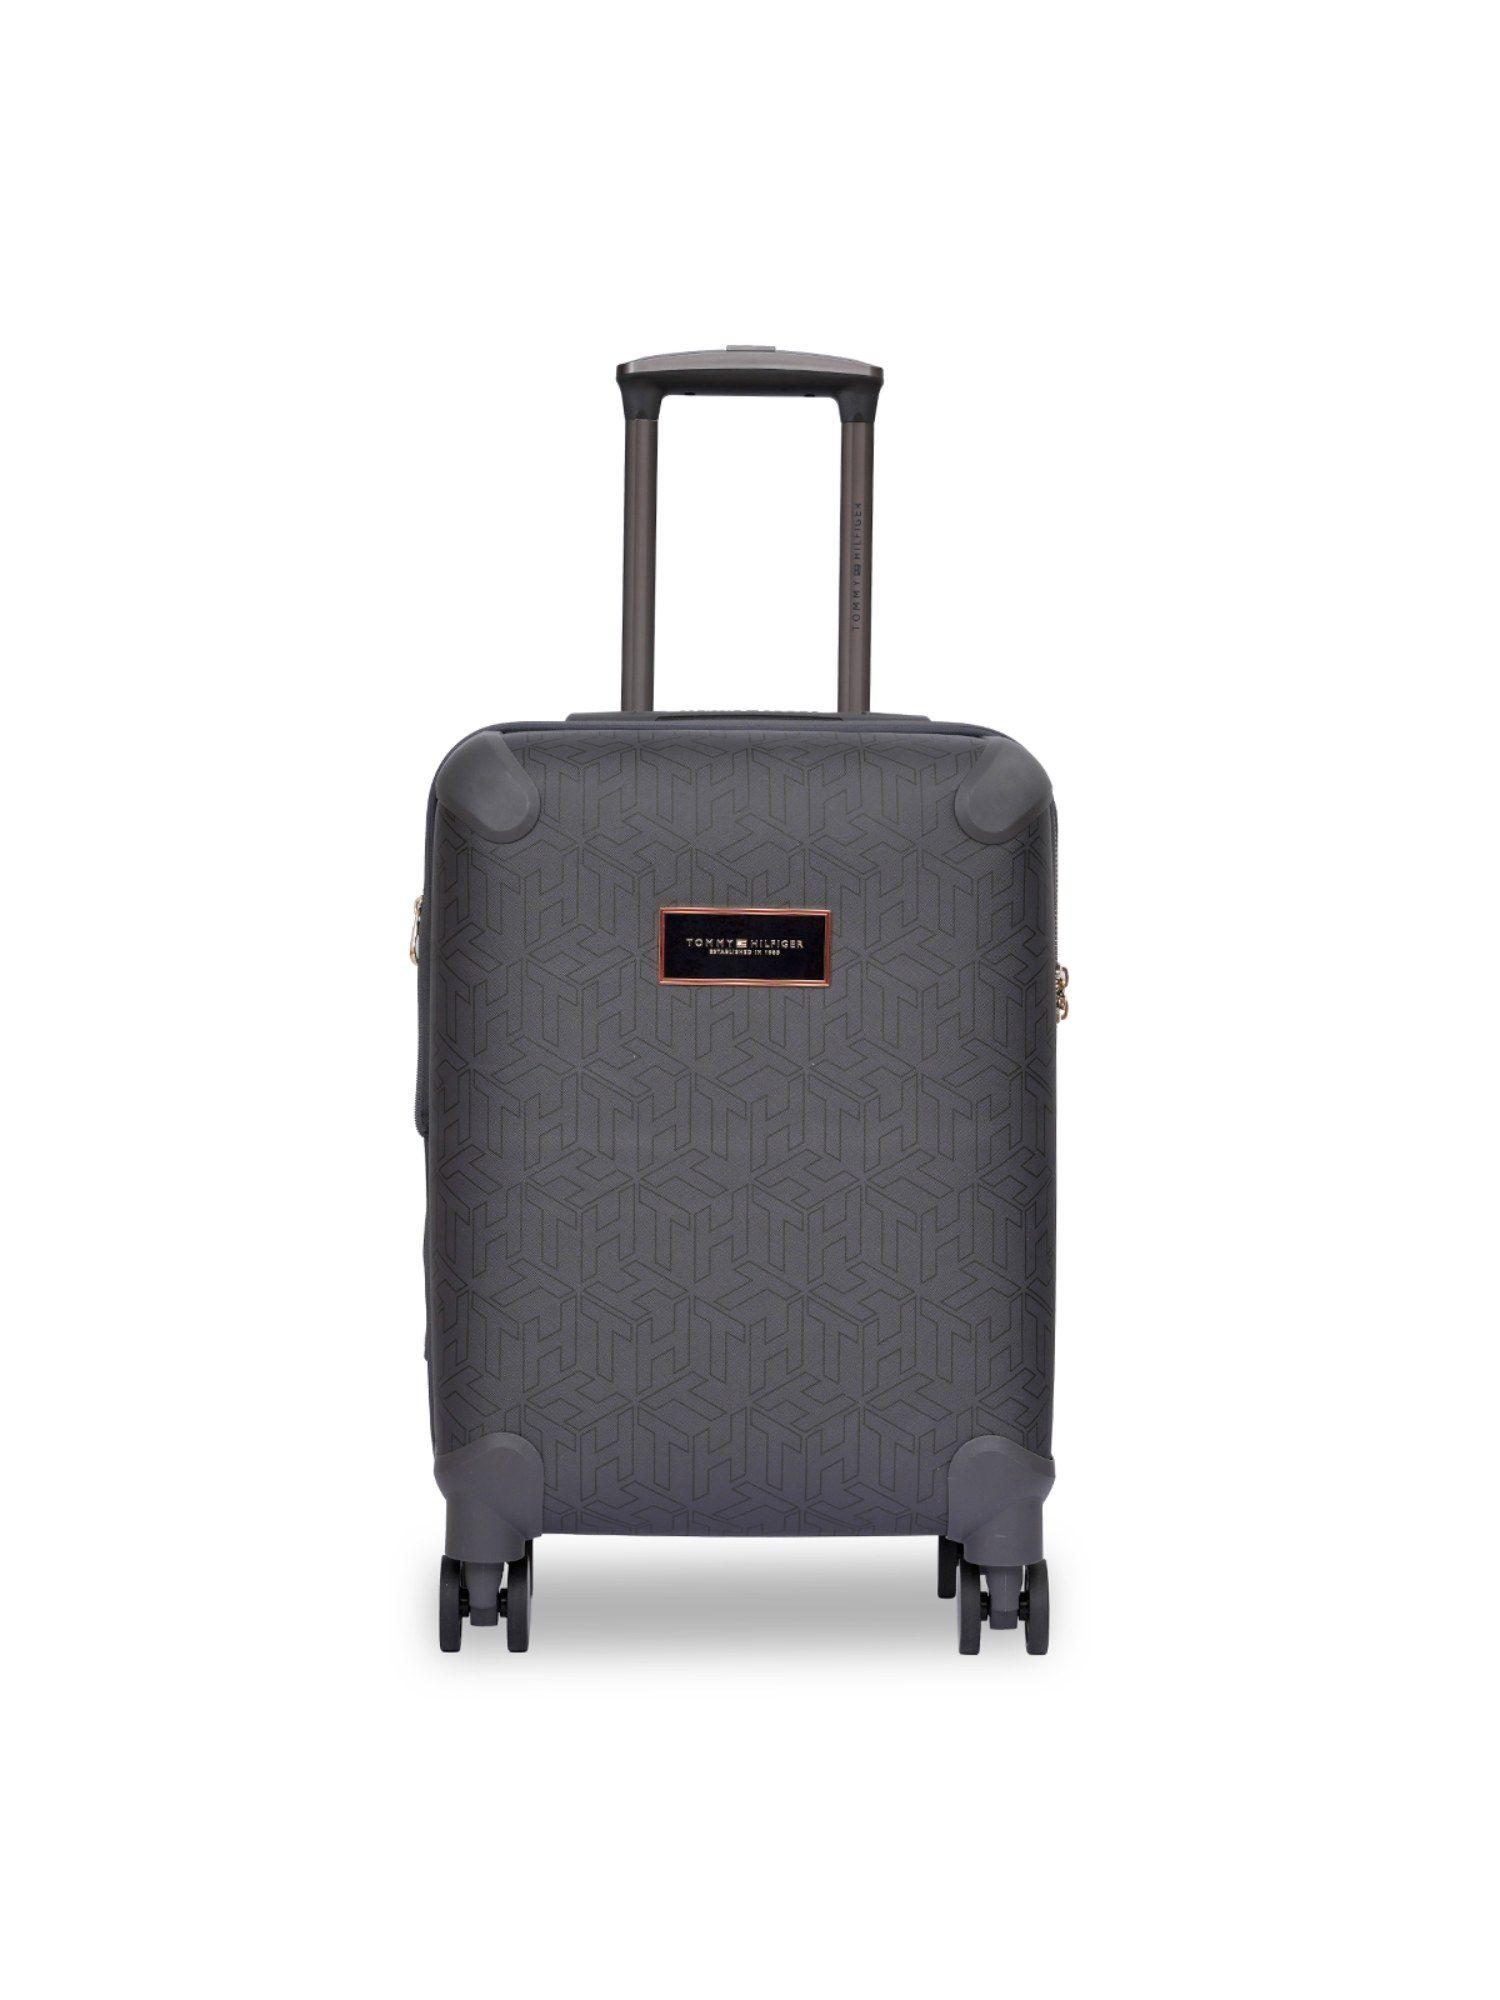 jazz-unisex-hard-luggage---grey-trolley-bag